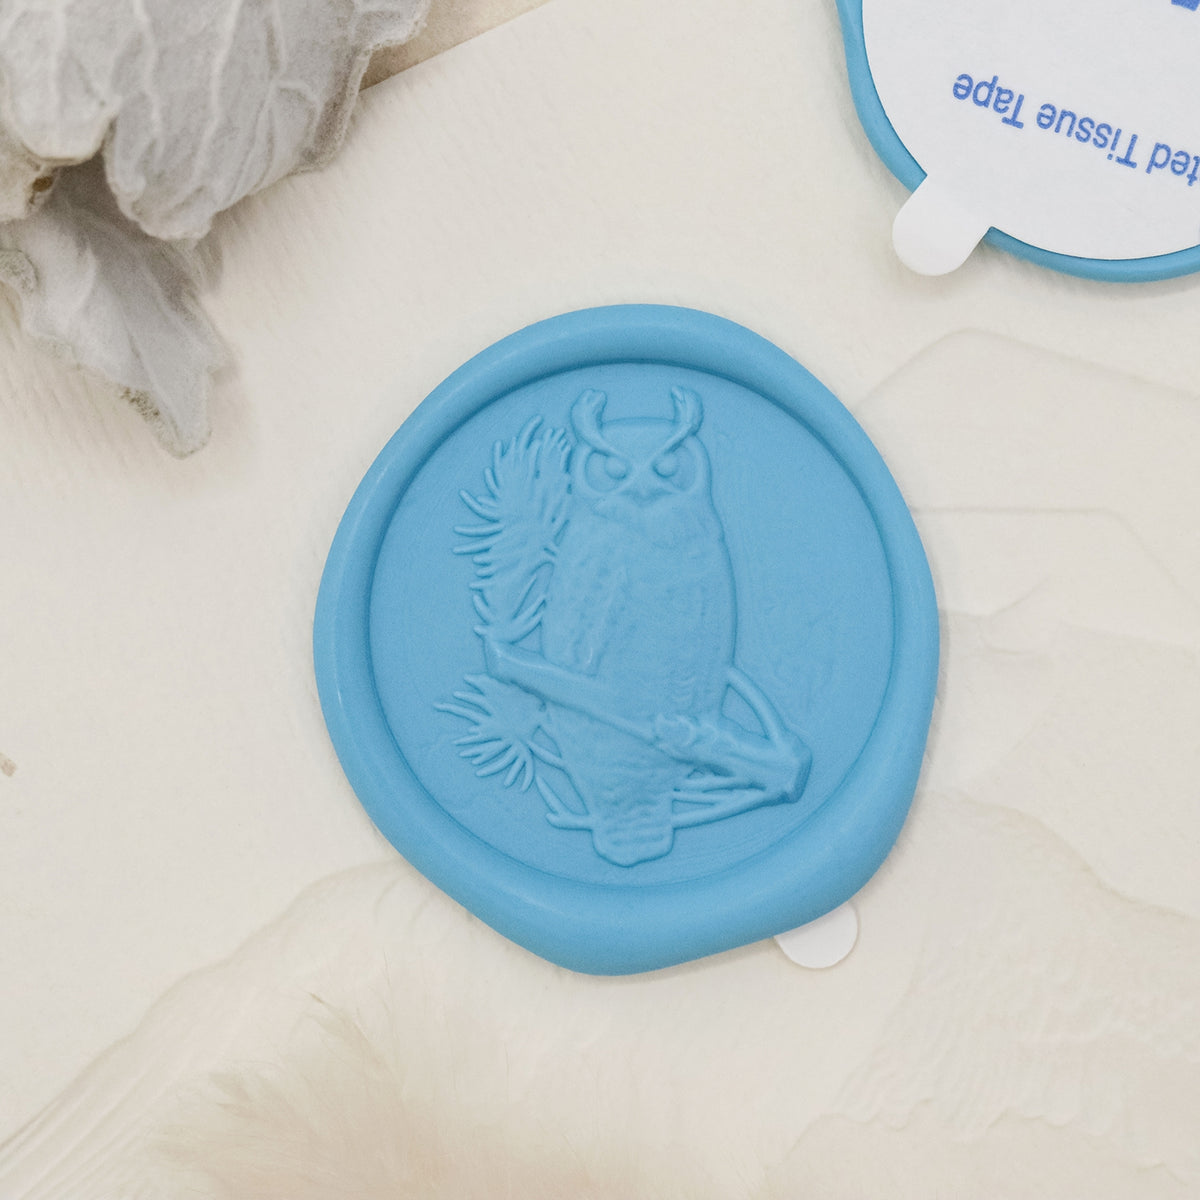 Owl Post Self-adhesive Wax Seal -  Canada